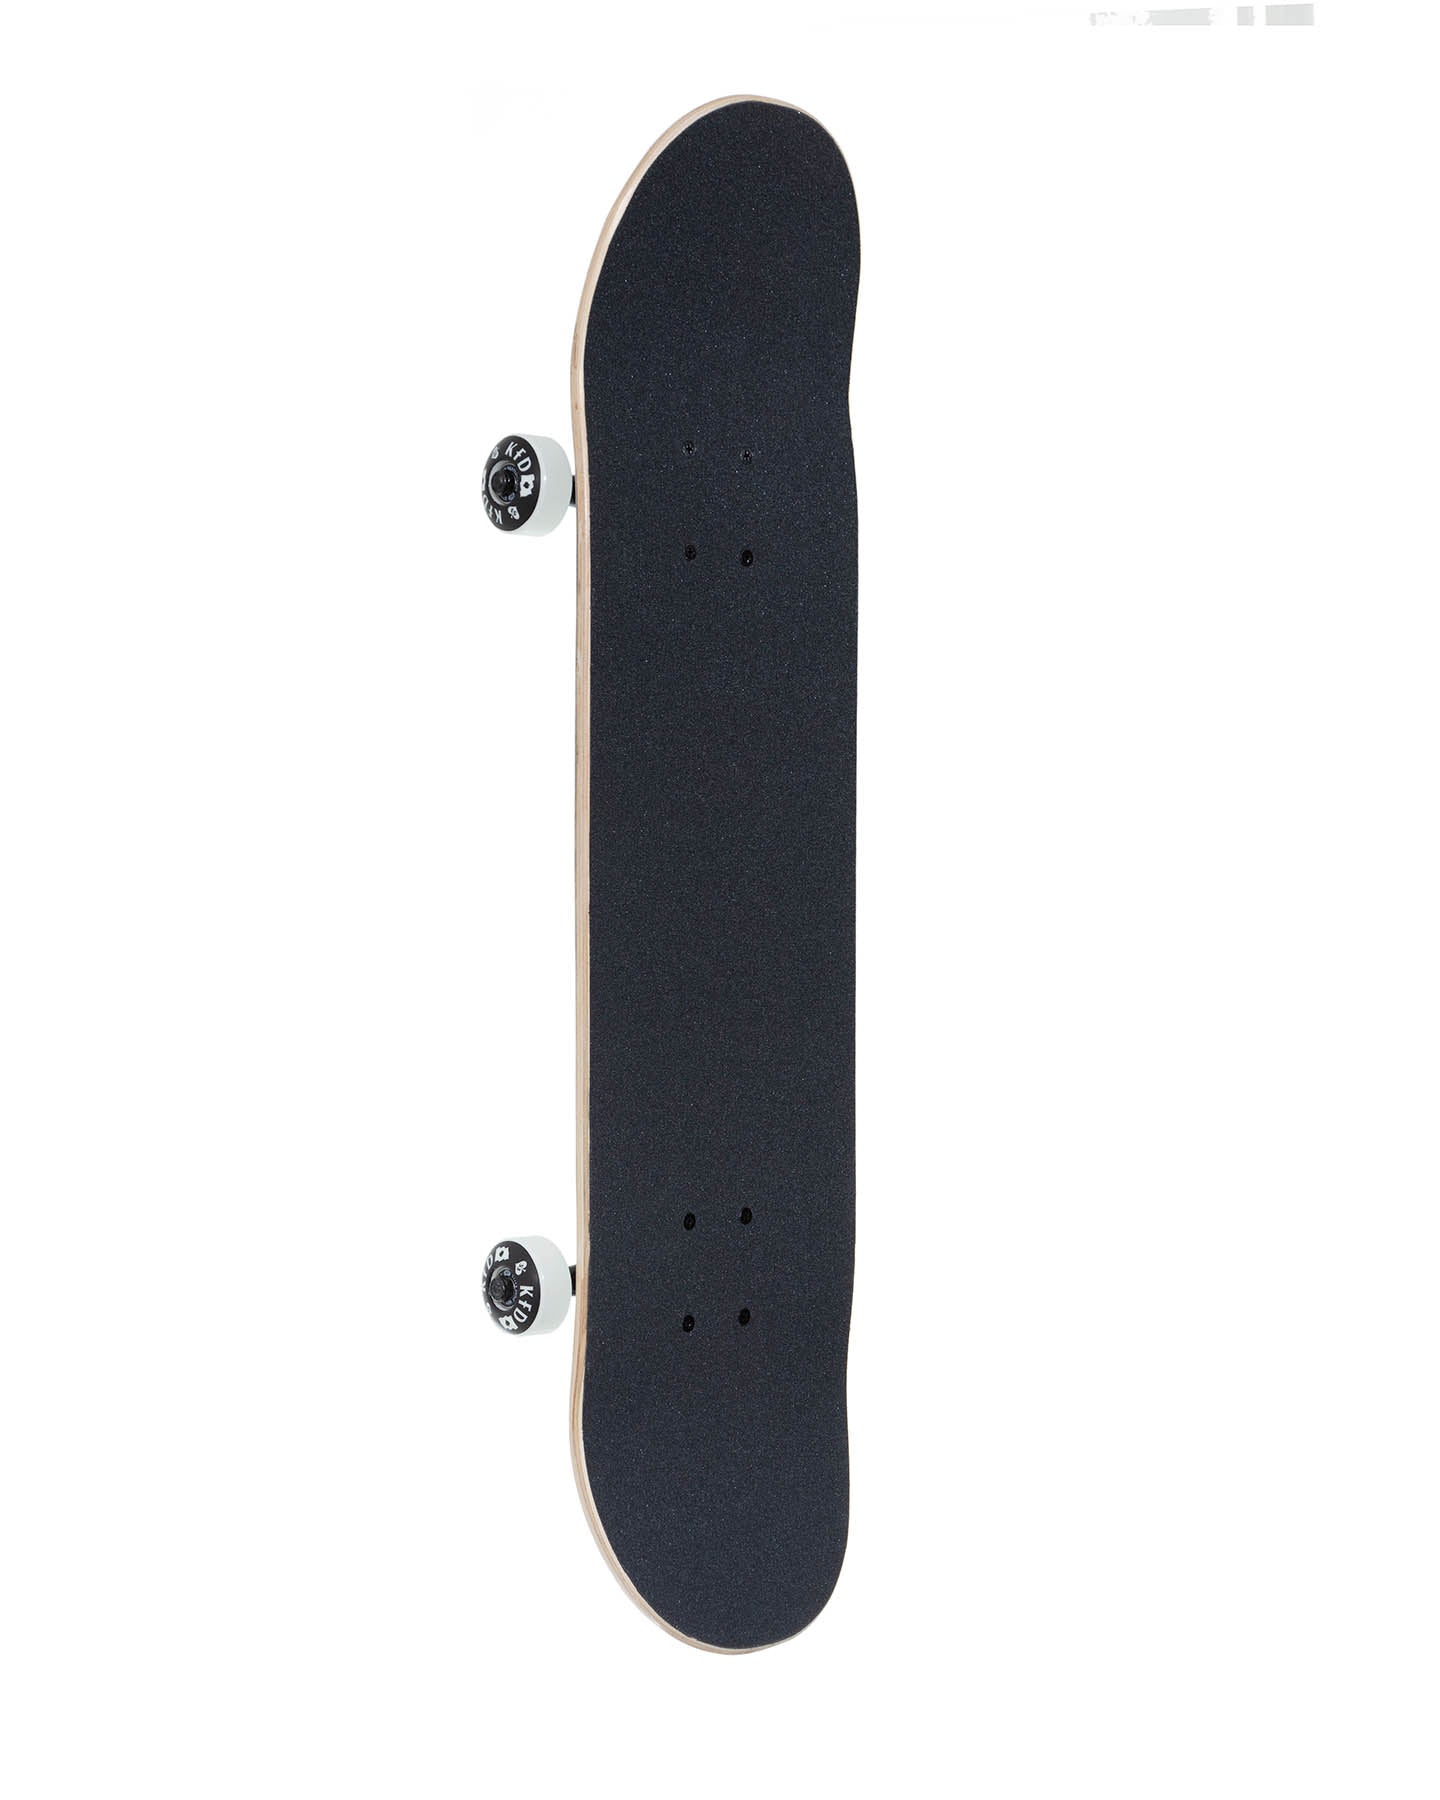 Kfd Complete Skateboard Young Gunz Flagship Black - 8"